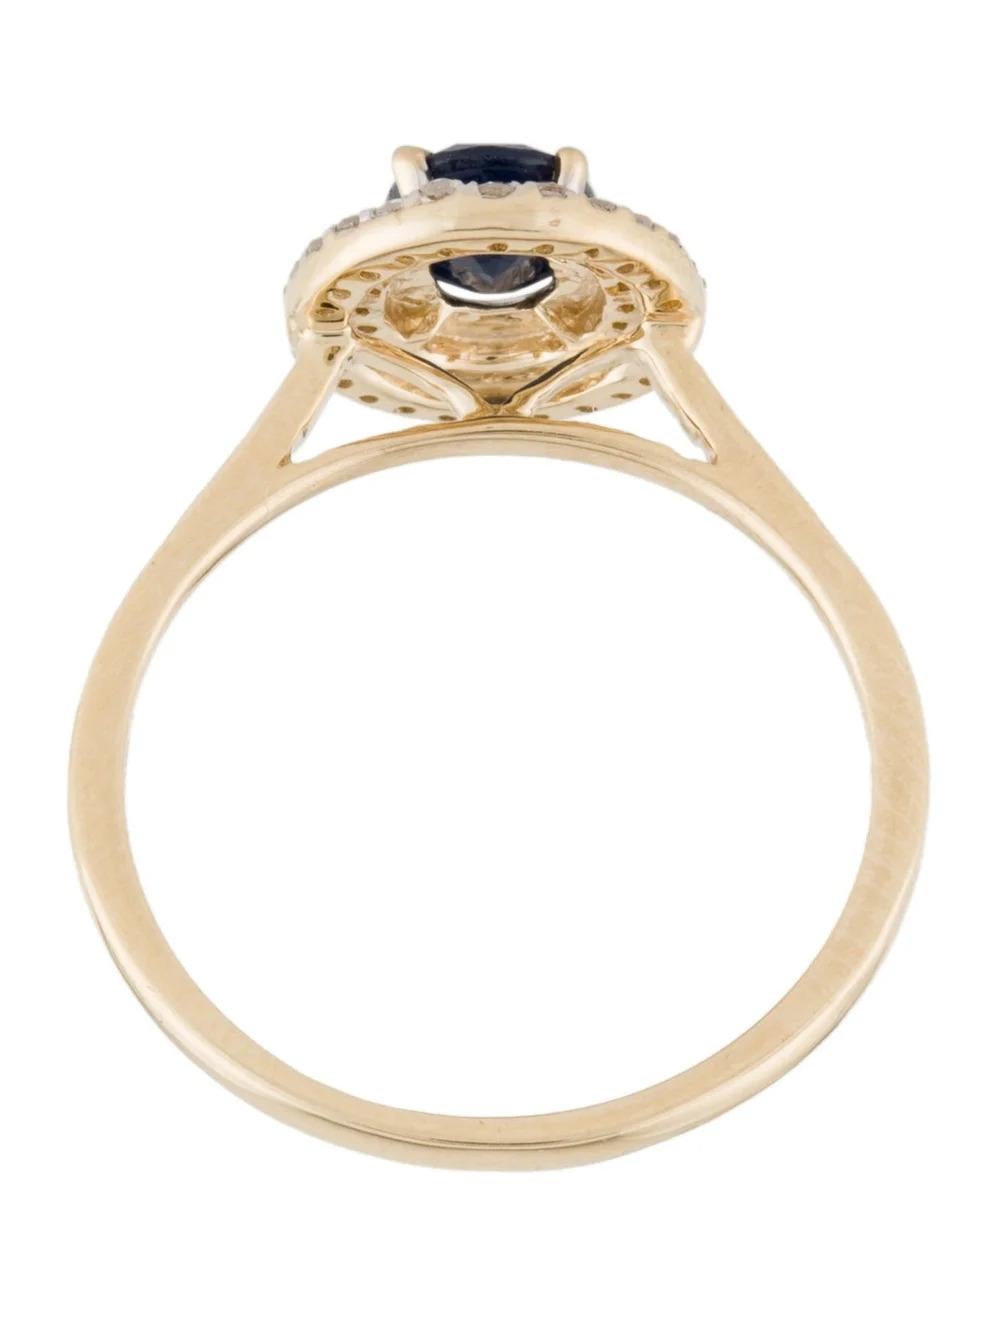 Women's 14K Sapphire & Diamond Cocktail Ring, Size 6.25 - Elegant Statement Jewelry